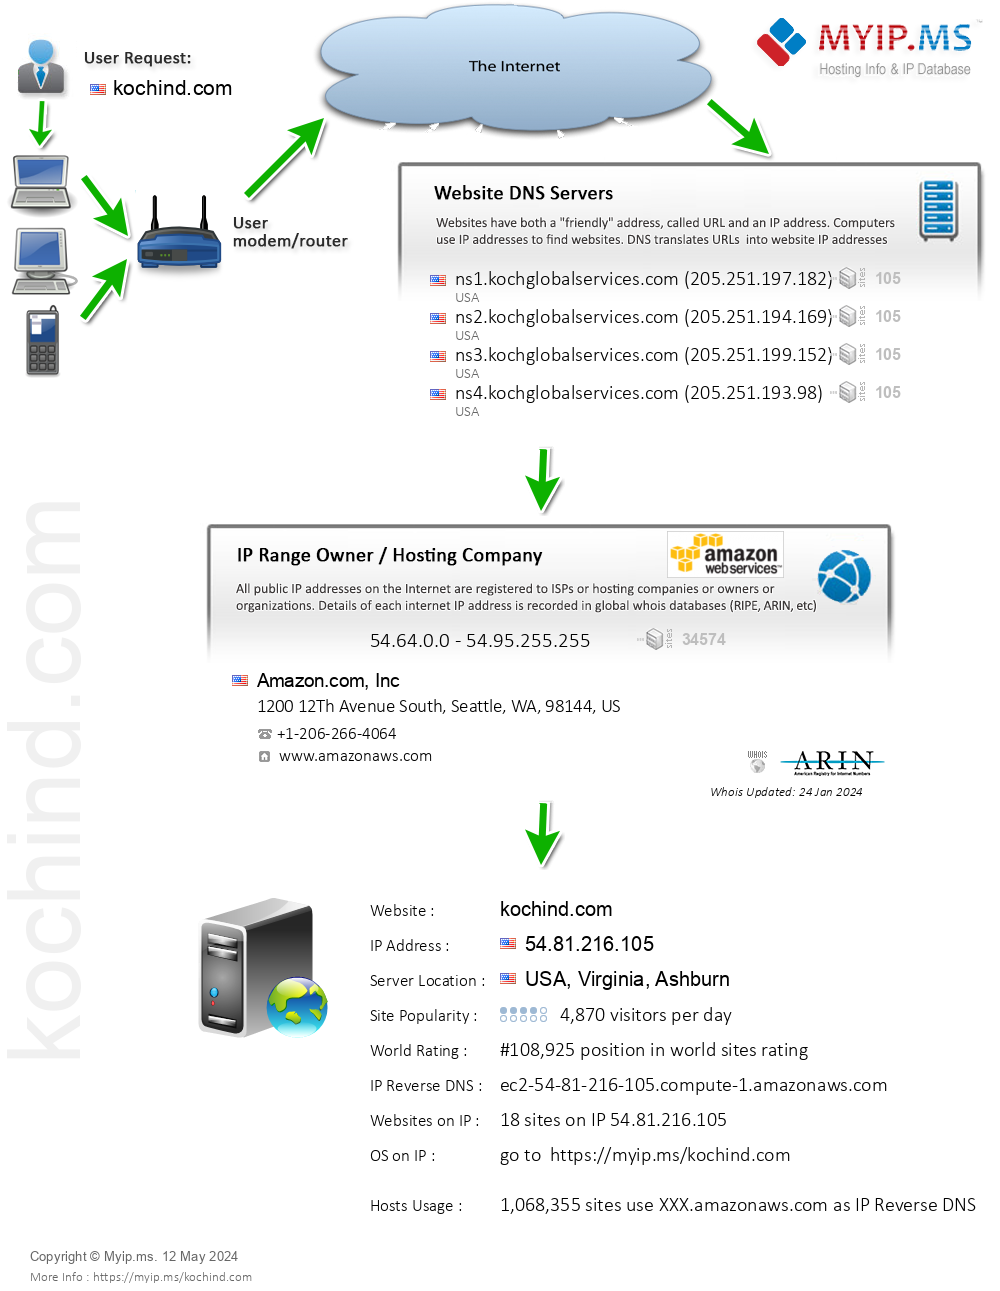 Kochind.com - Website Hosting Visual IP Diagram